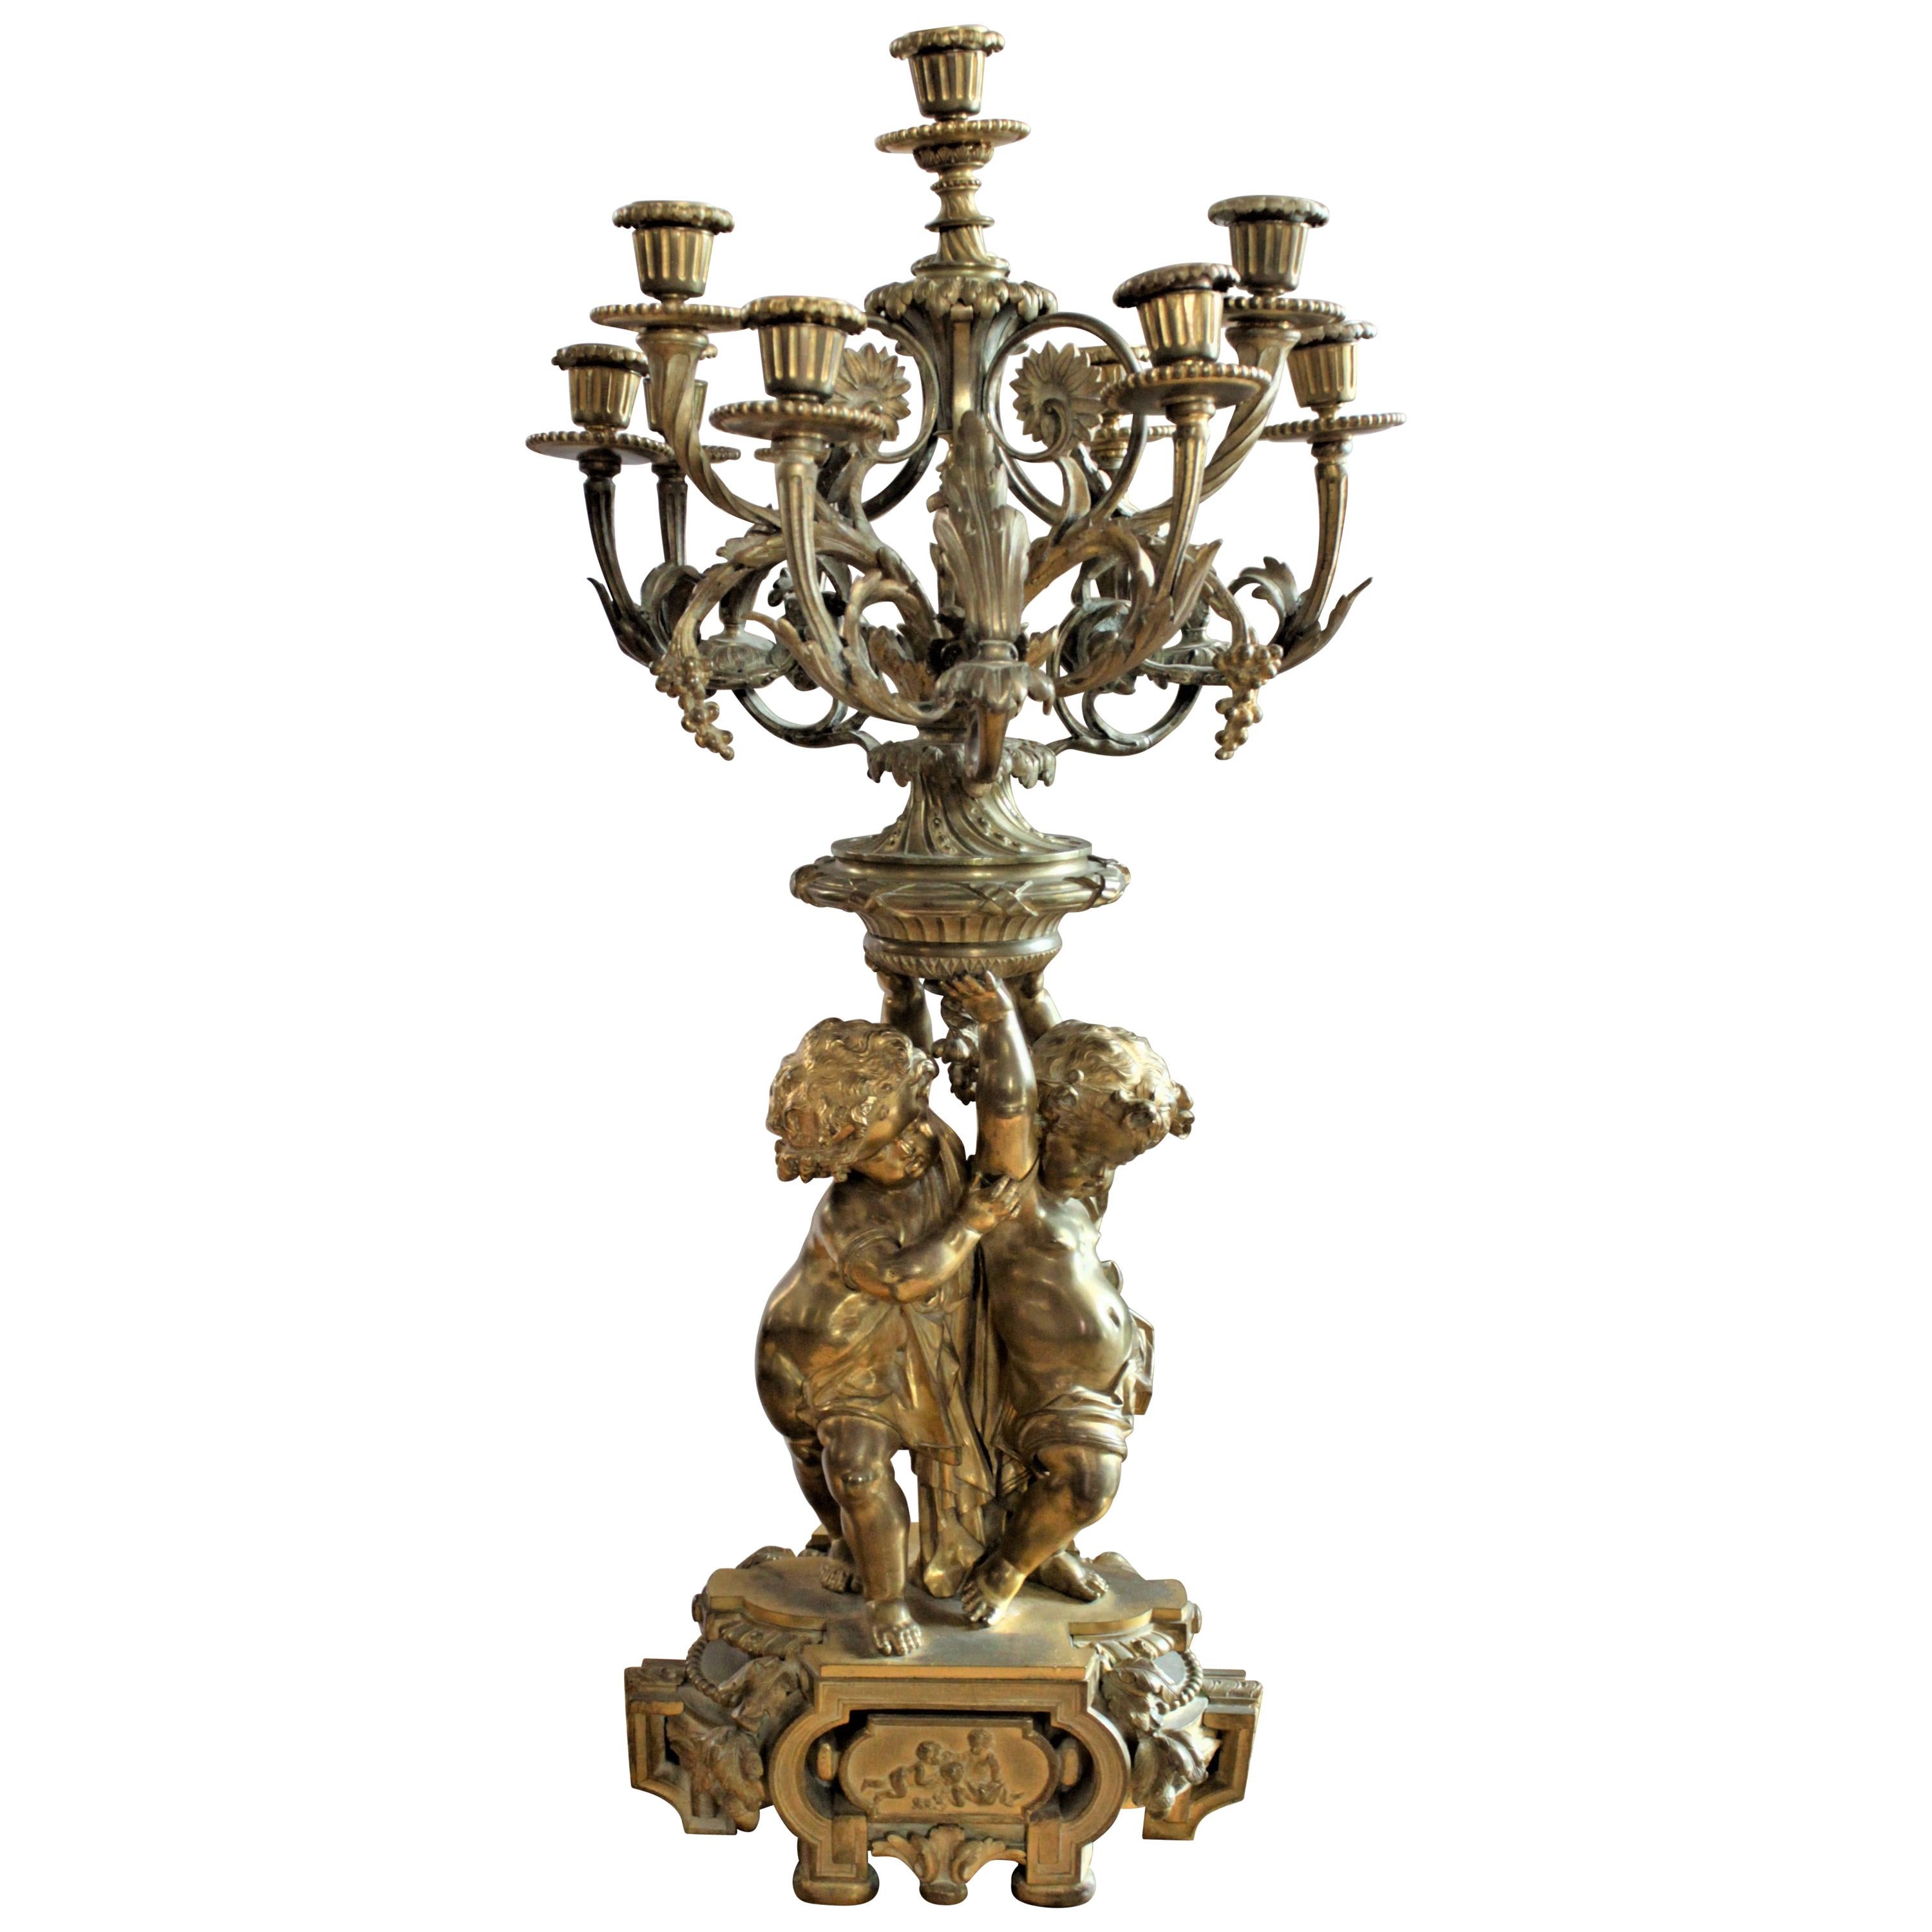 Large Ornate Antique French Solid Gilt Bronze Candelabra with Figural Base